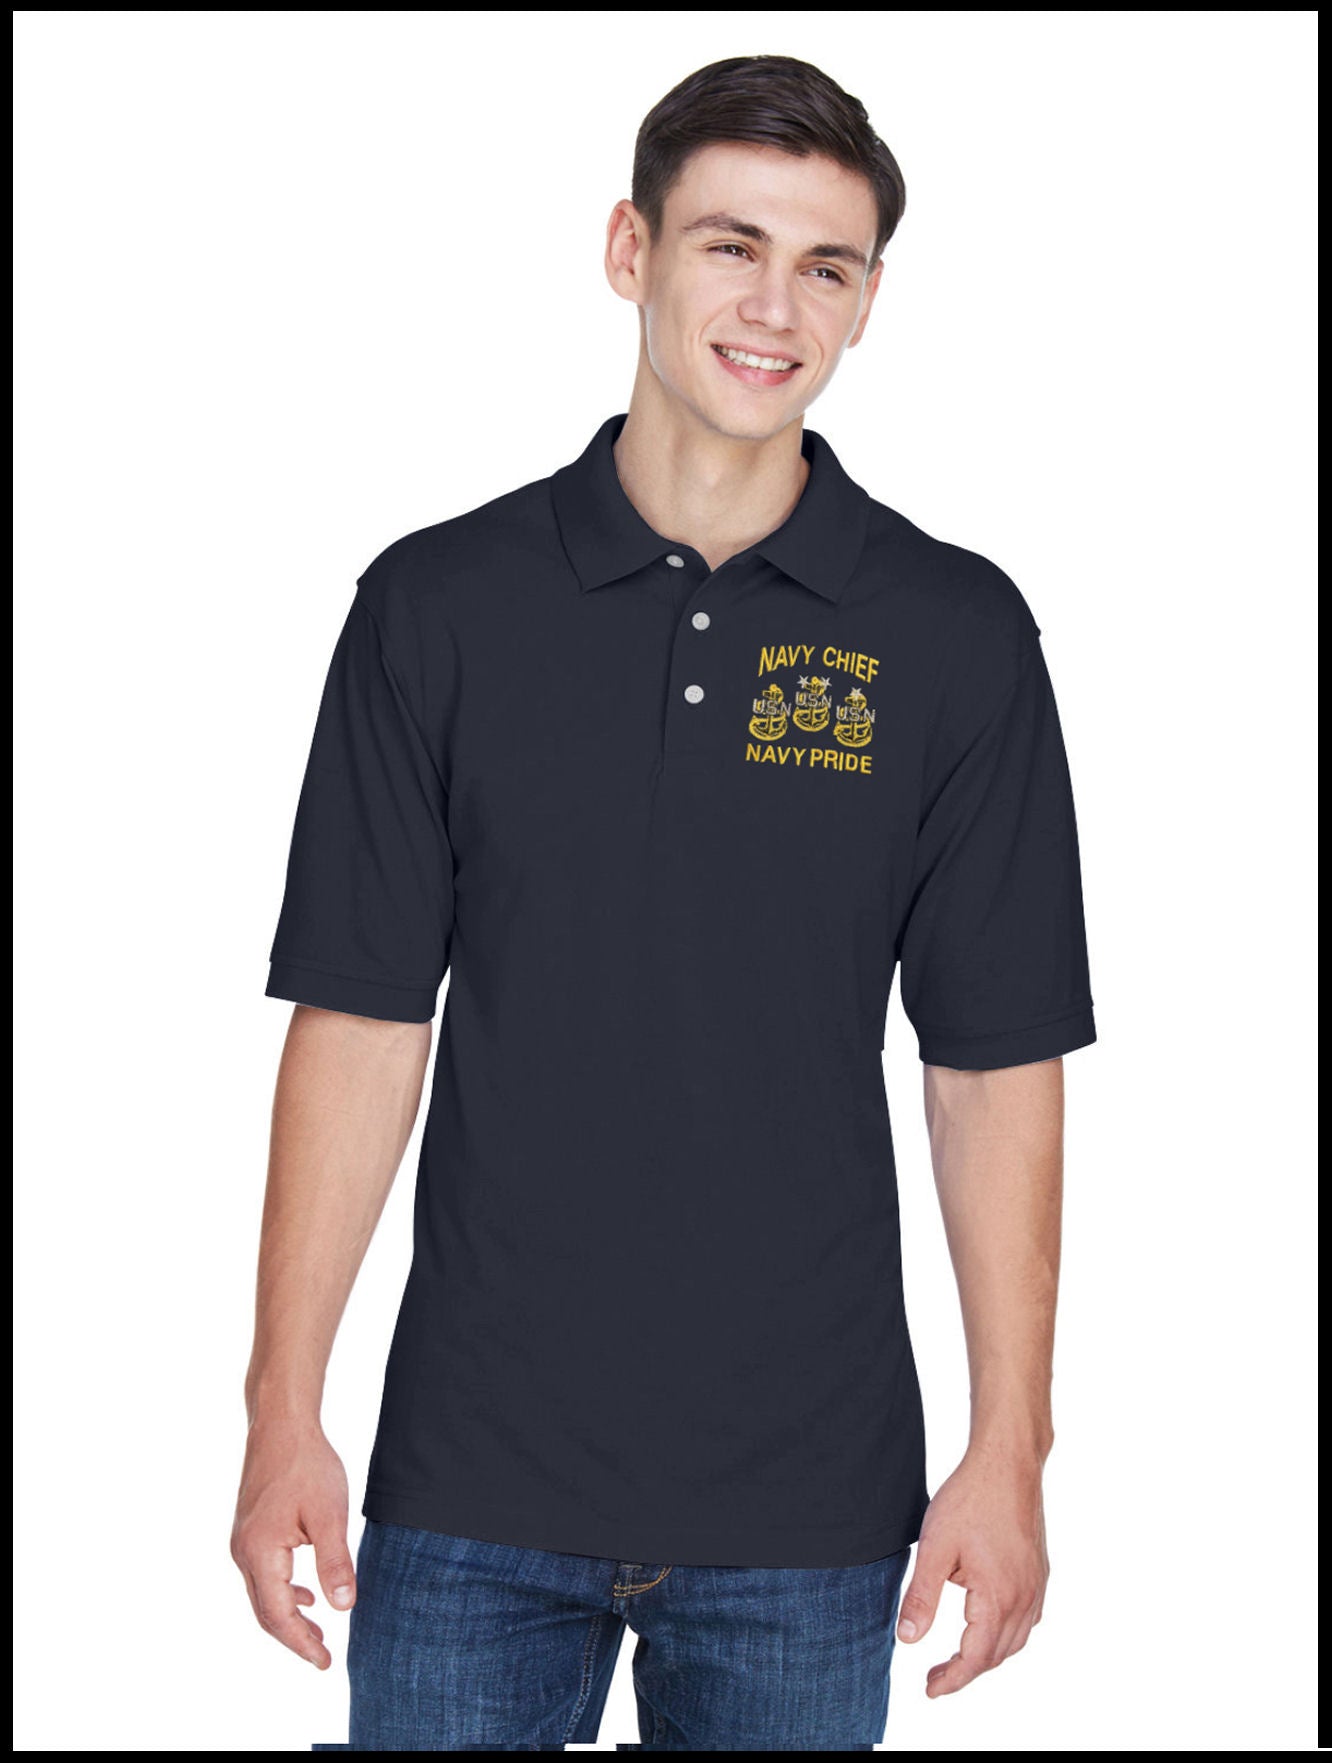 CPO Navy Chief, Navy Pride Navy Blue Polo Shirt 3 Anchors